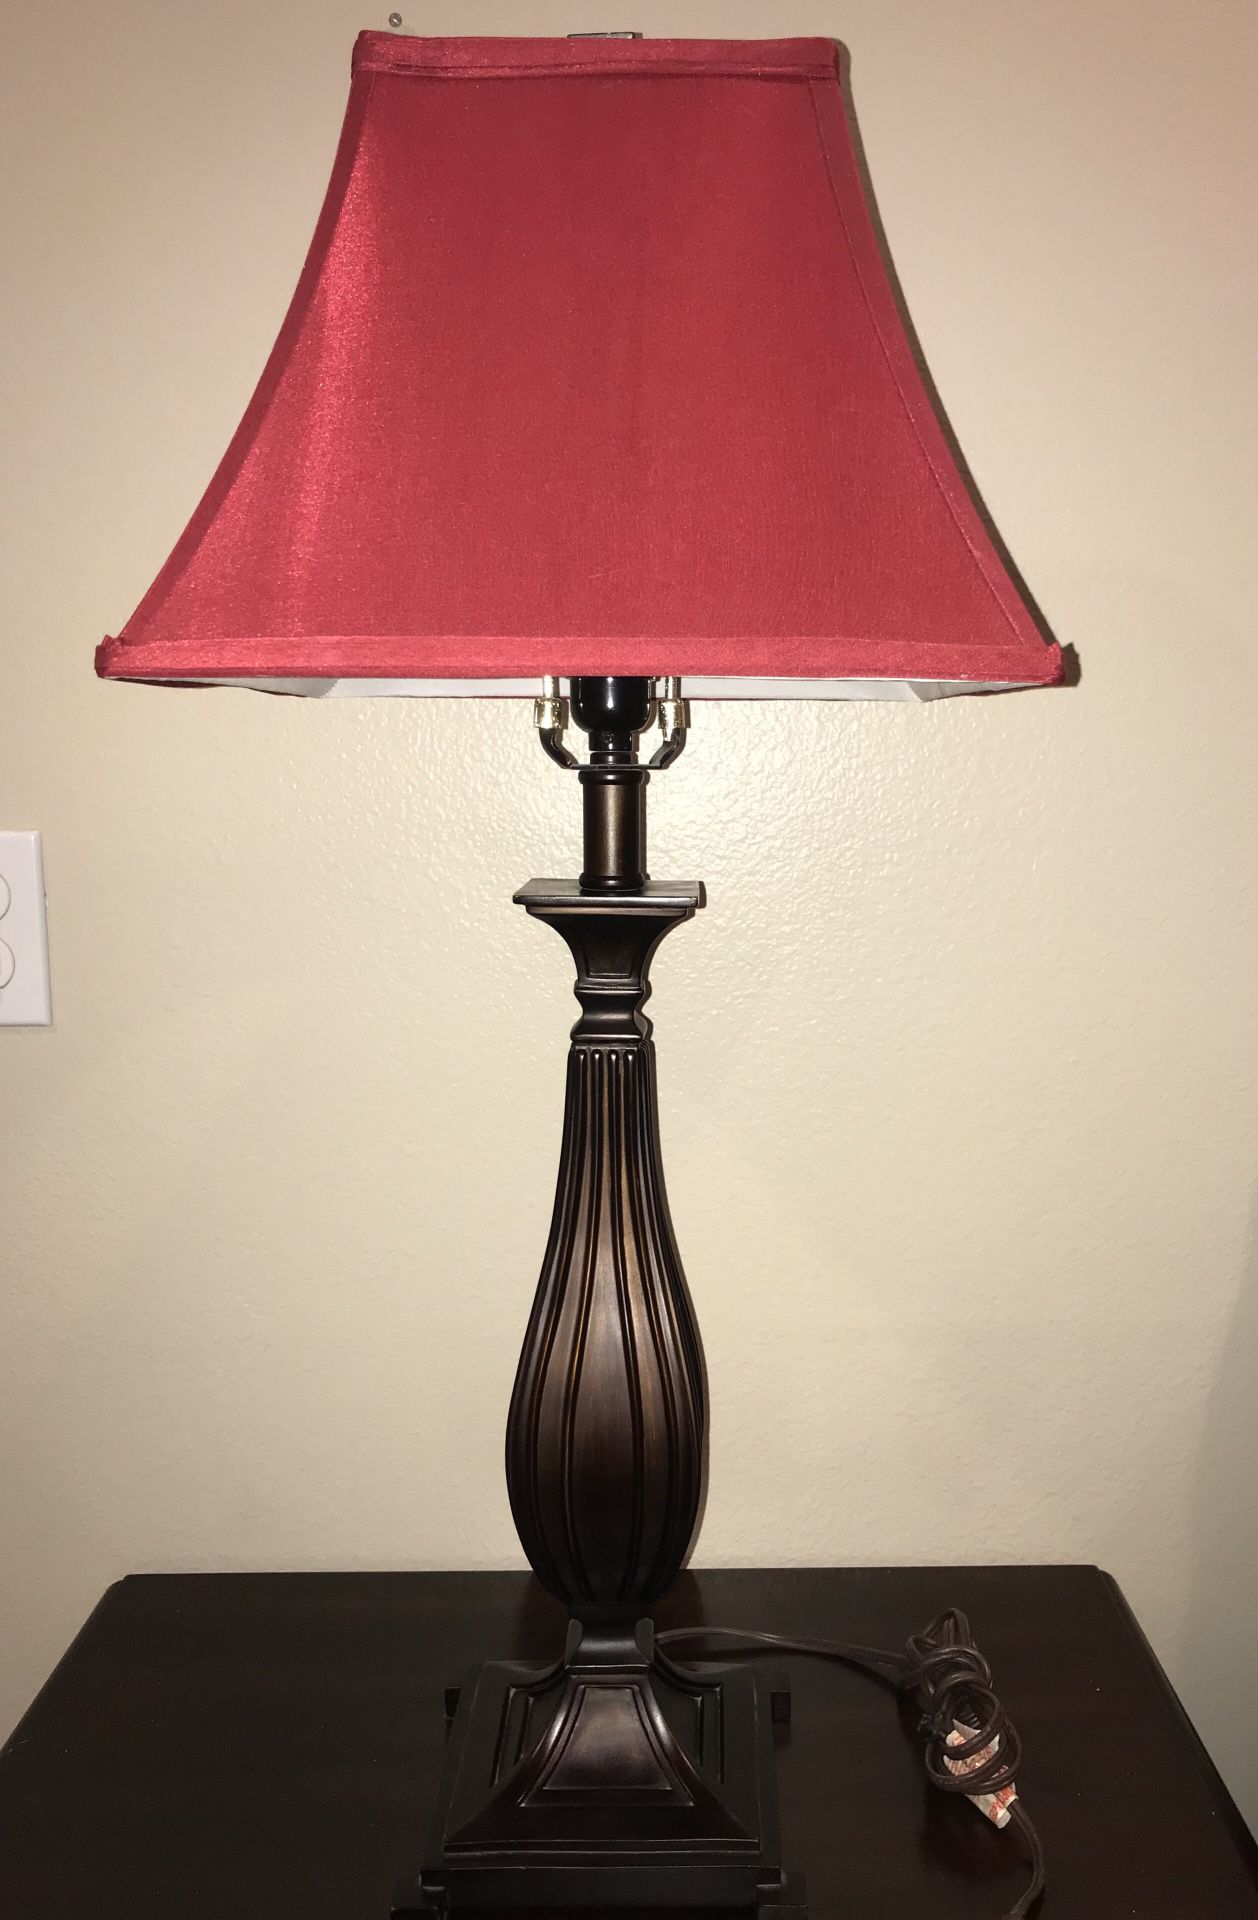 31-inch Lamp